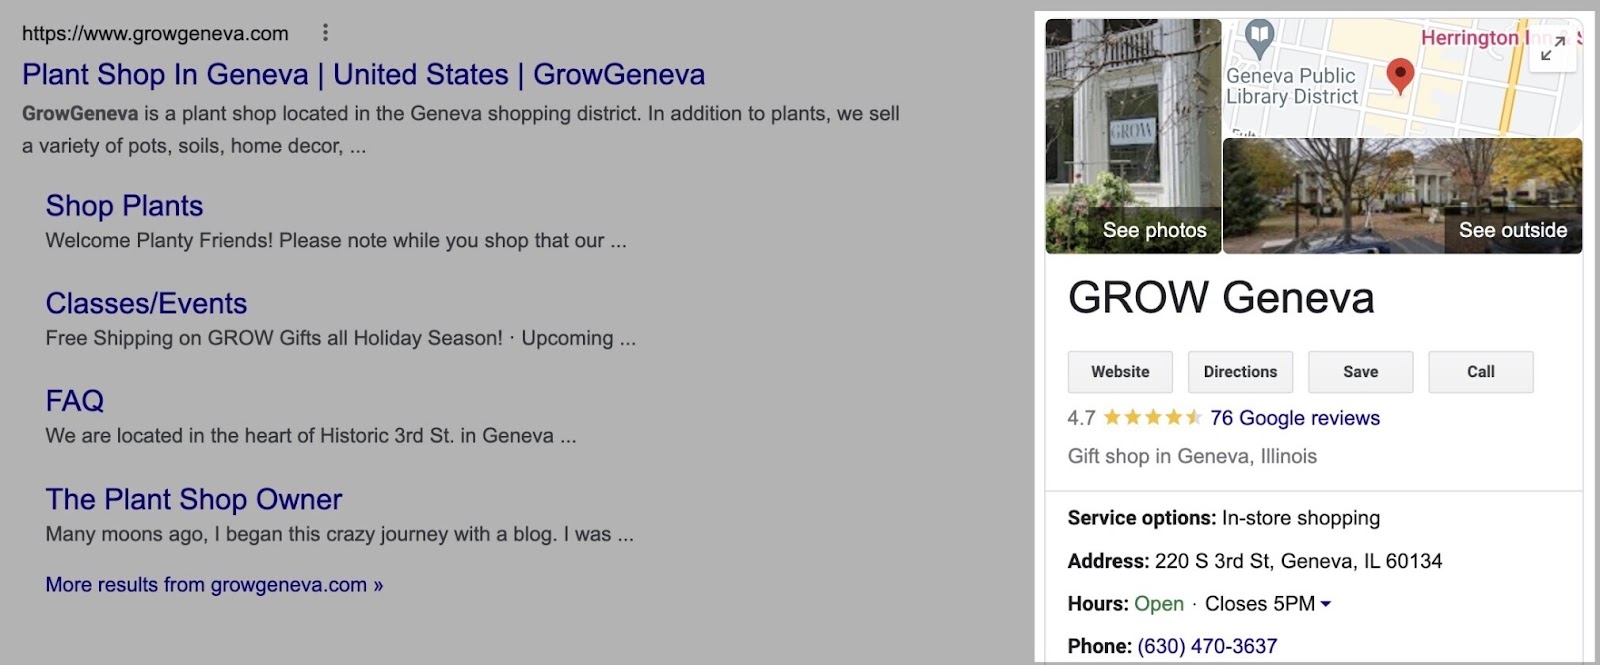 Google Business Profile for "GROW Geneva"